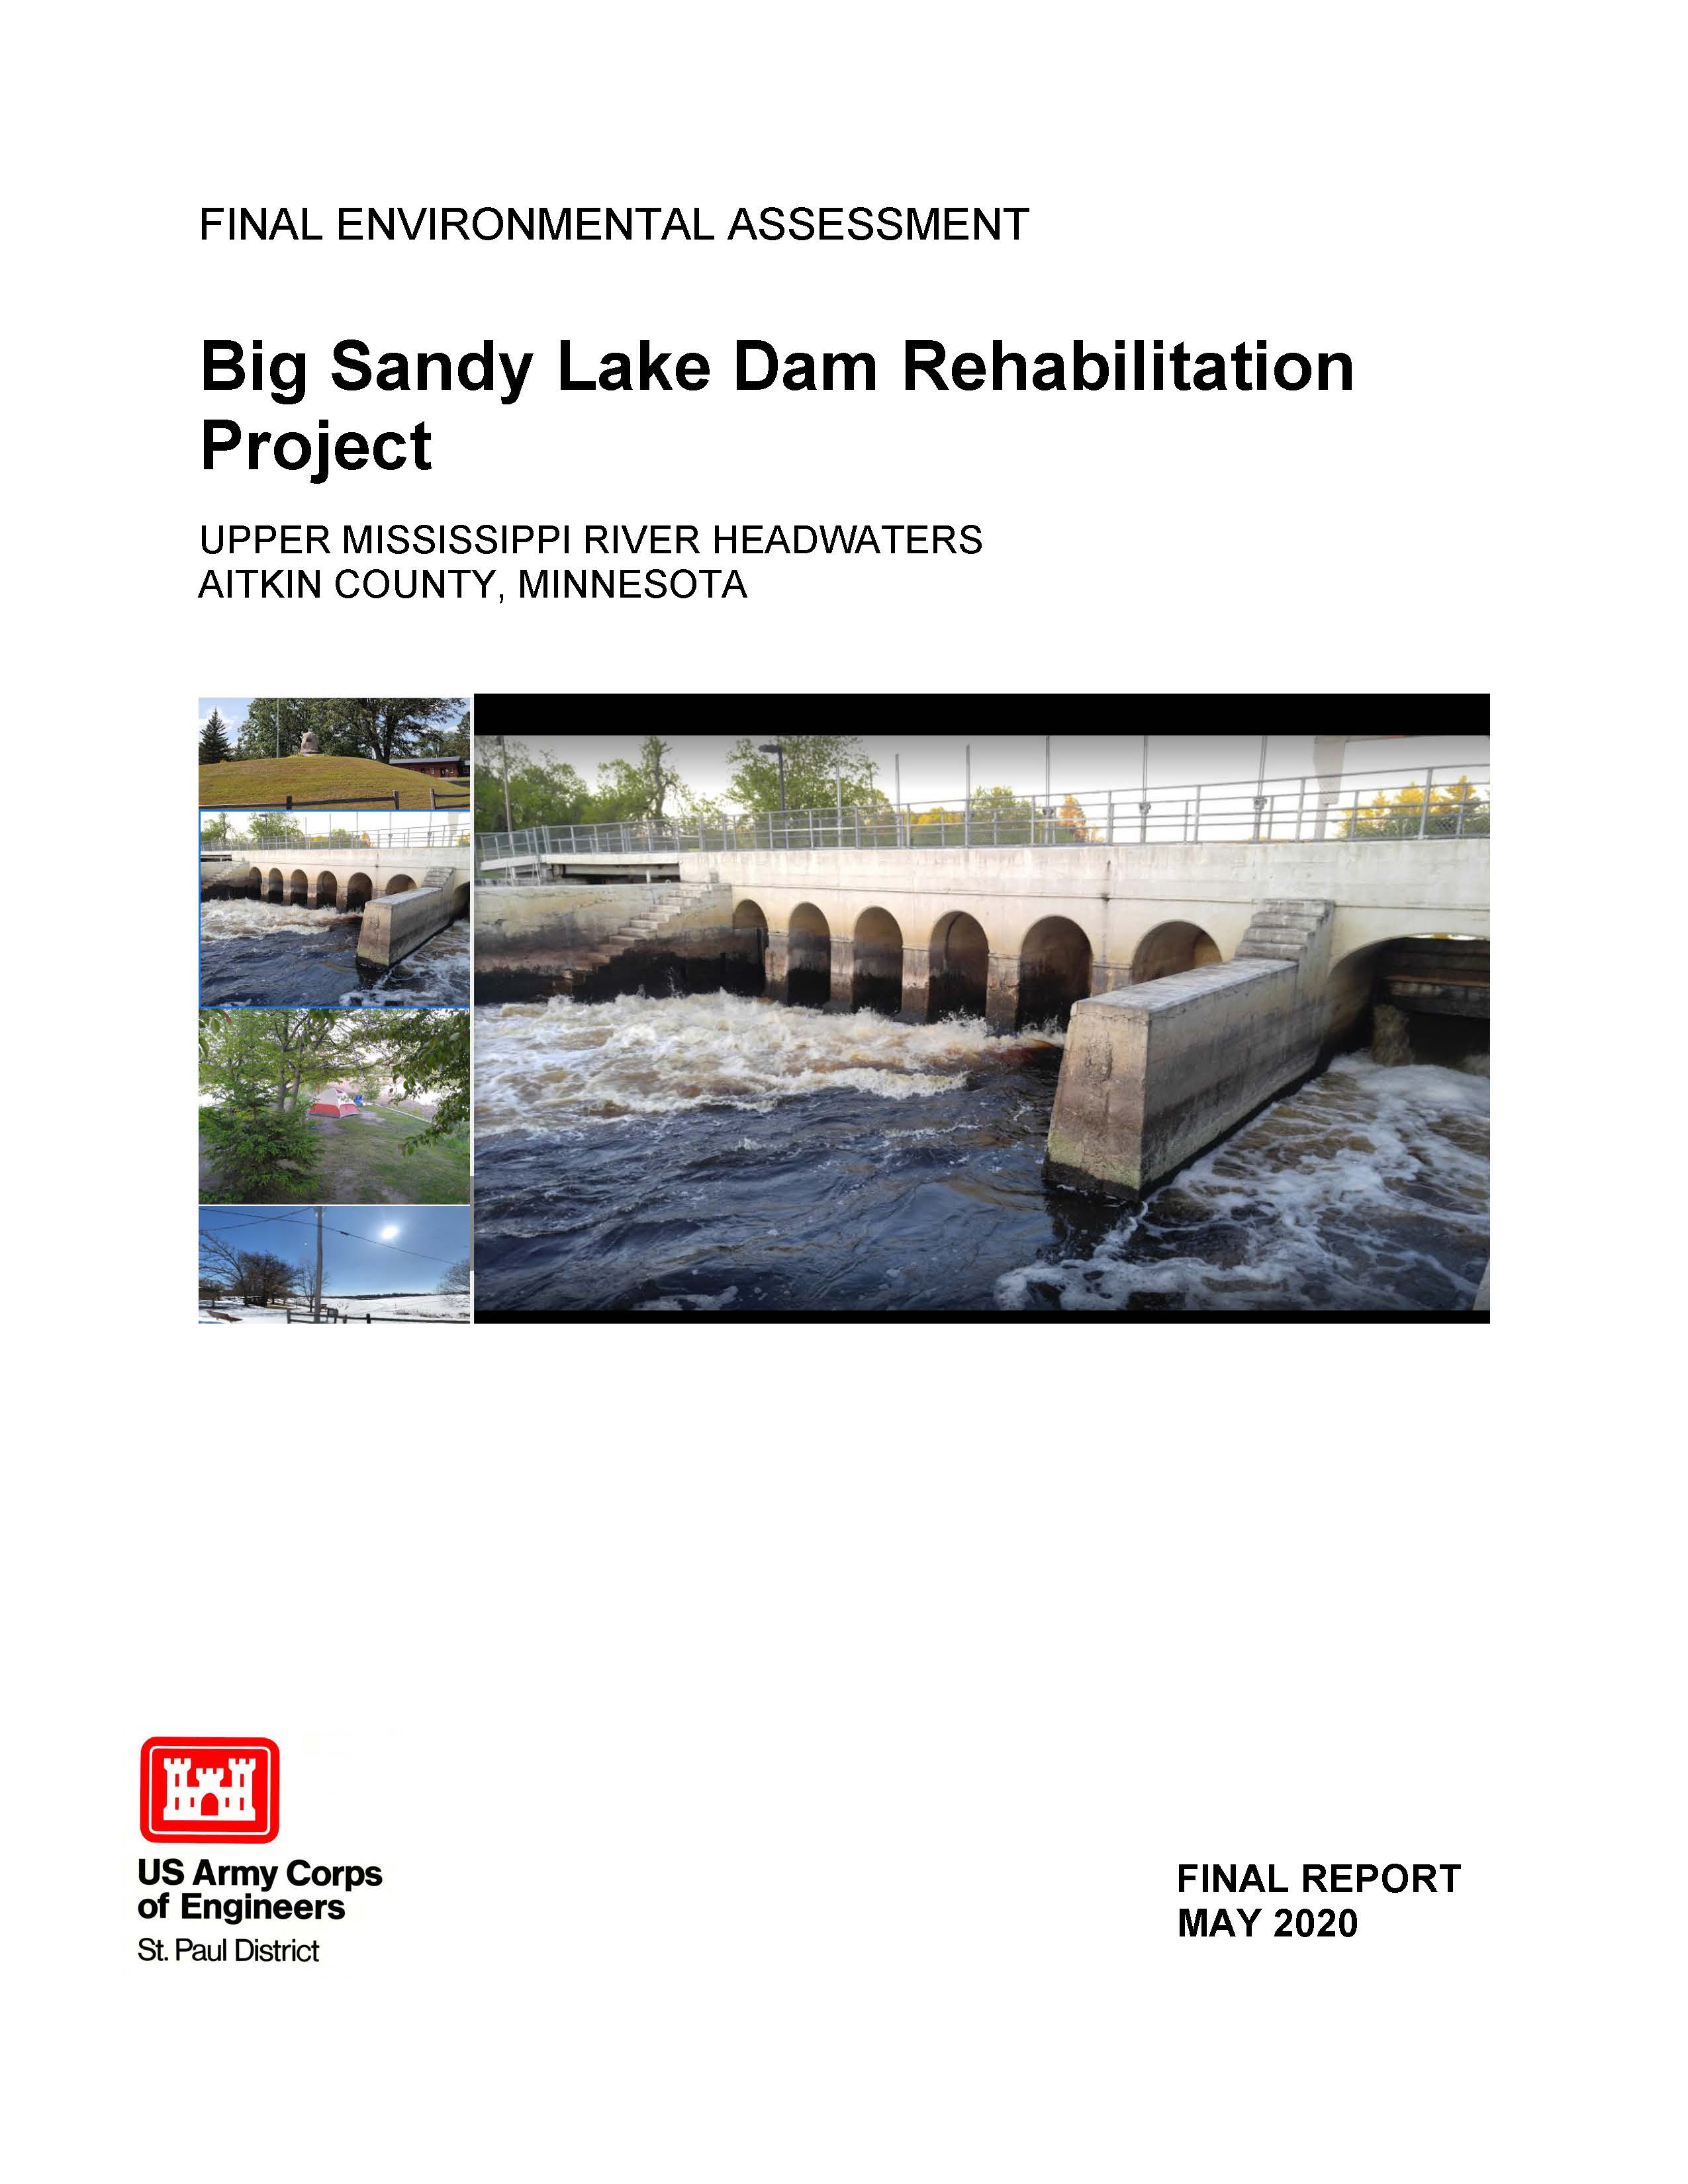 Final Environmental Assessment for the Big Sandy Lake Dam Rehabilitation Project thumbnail